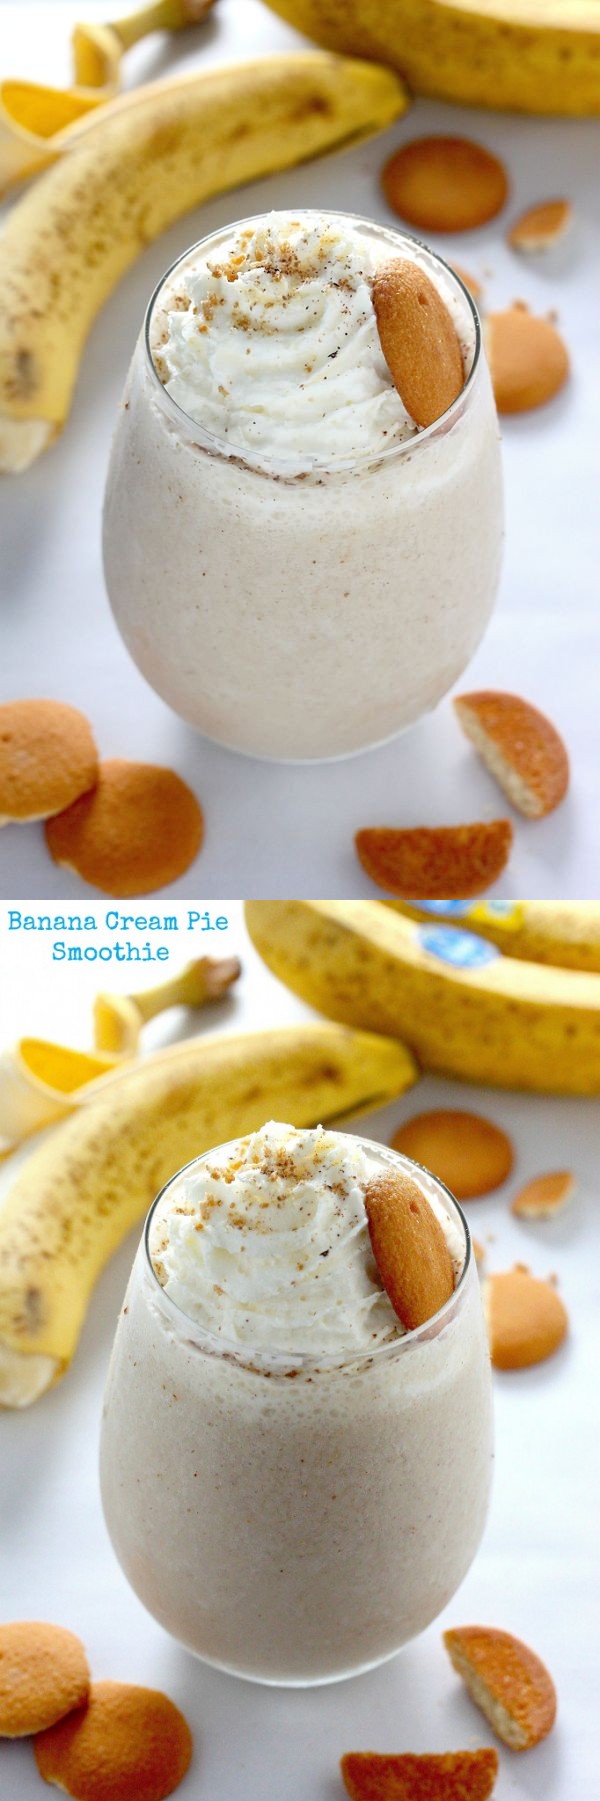 Healthy Banana Cream Pie Smoothie